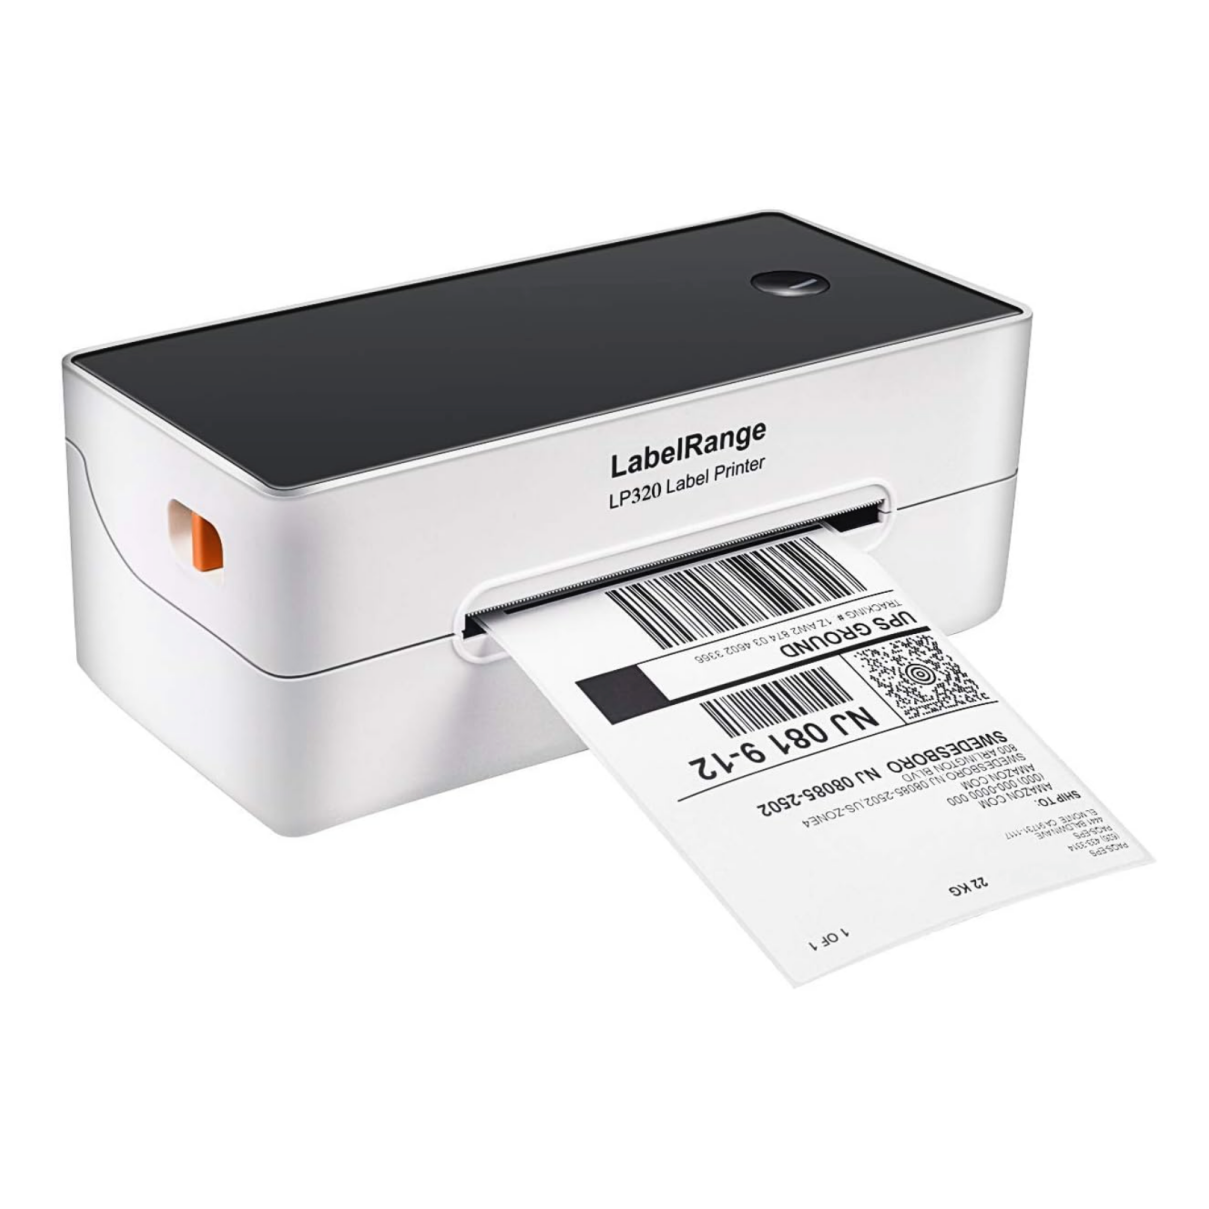 A LabelRange LP320 label printer